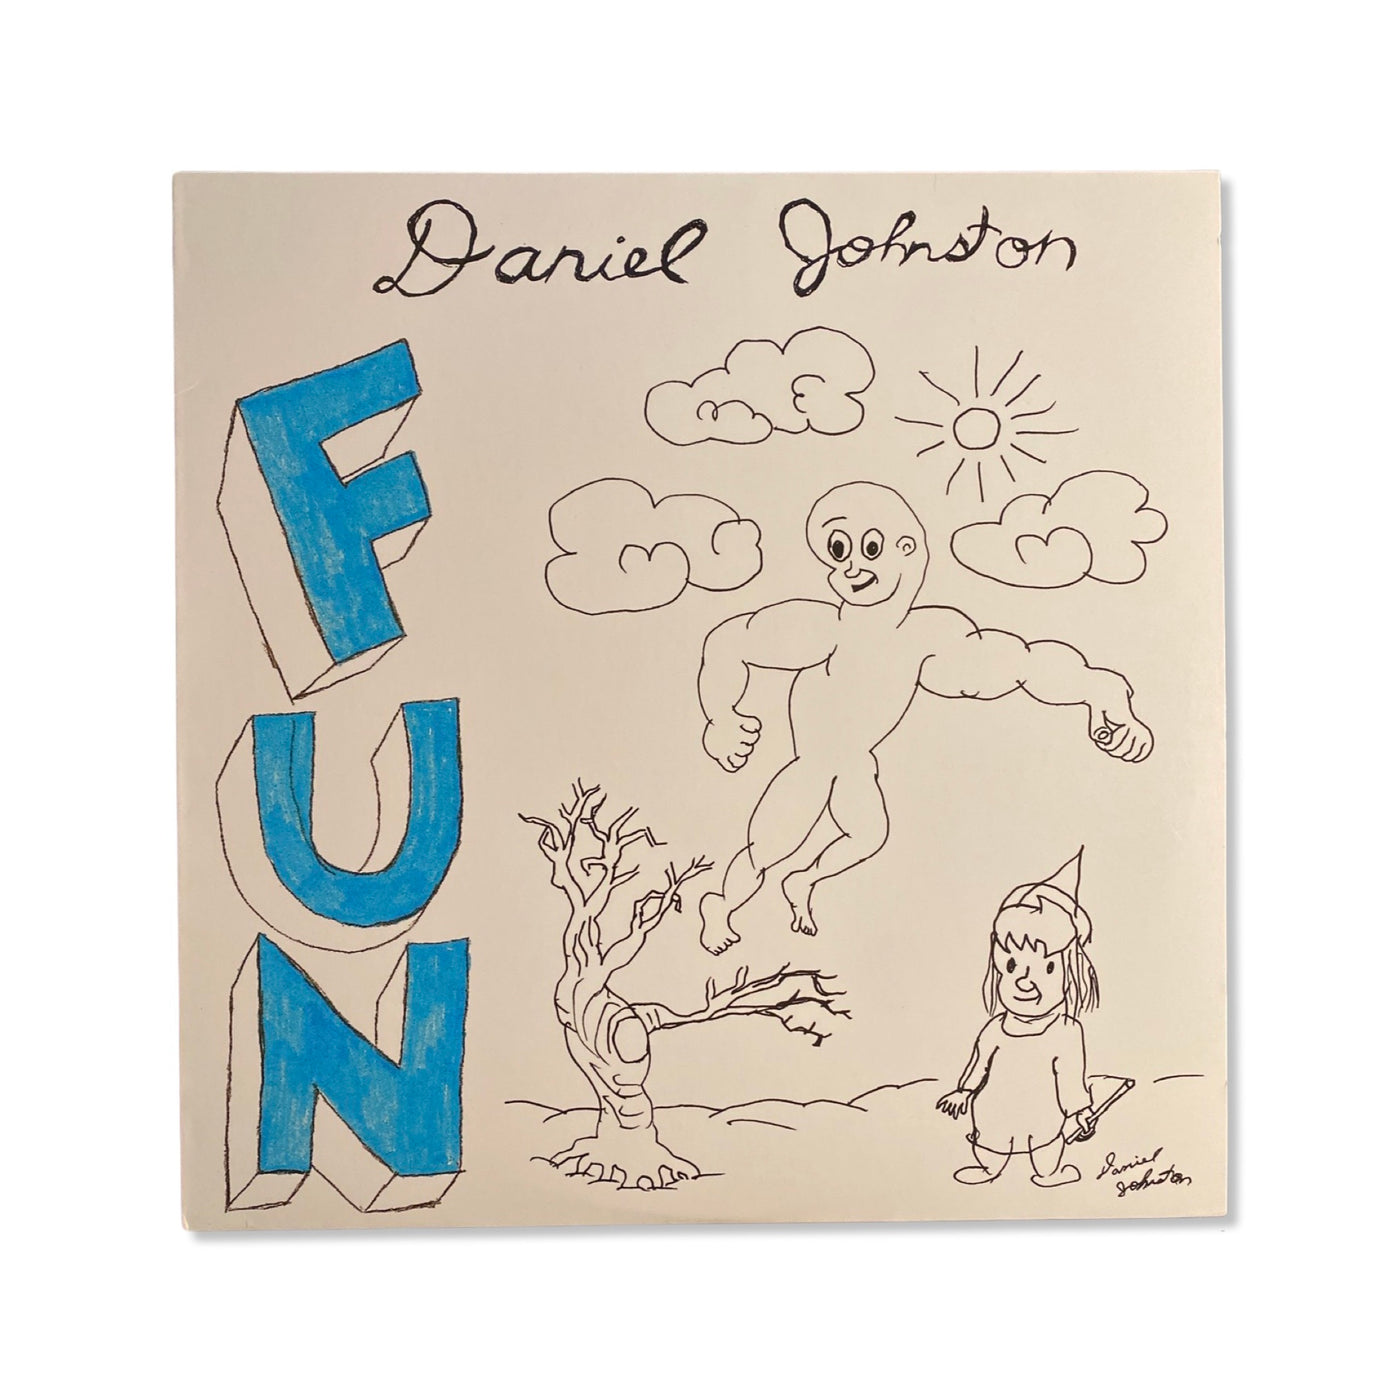 Daniel Johnston – Fun